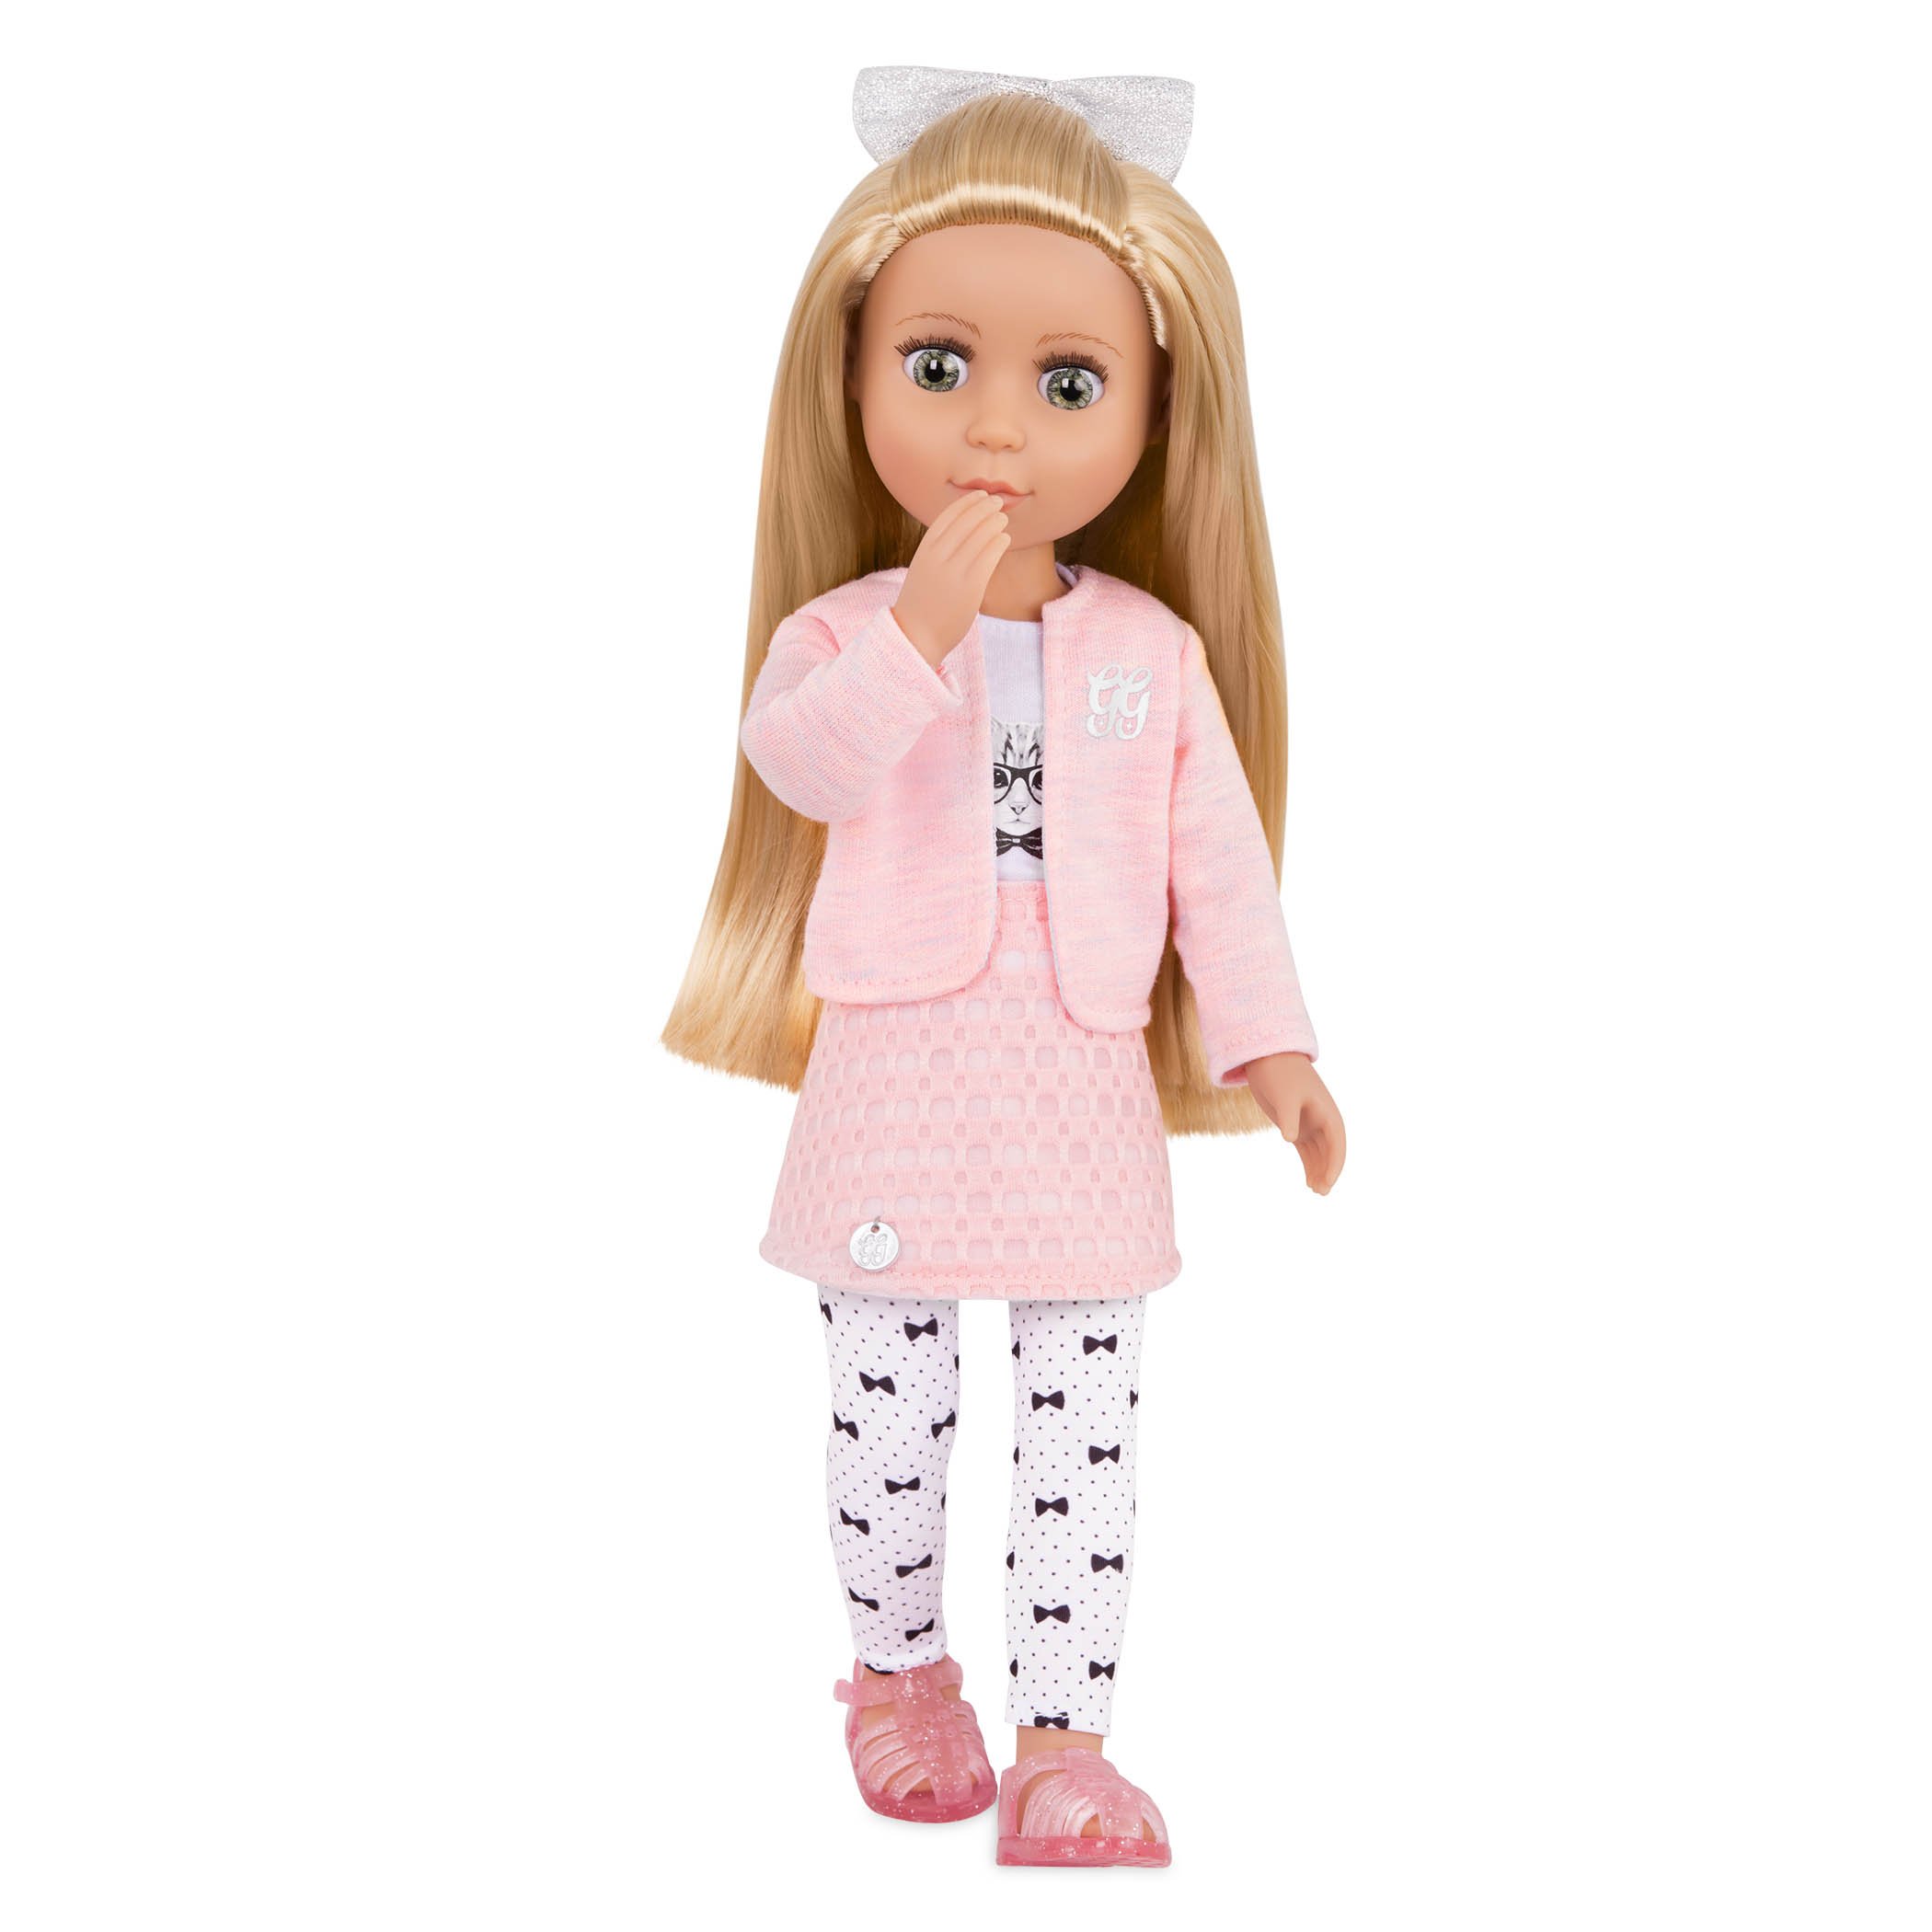 Glitter Girls - Fifer 14-inch Poseable Fashion Doll - Dolls for Girls Age 3 & Up